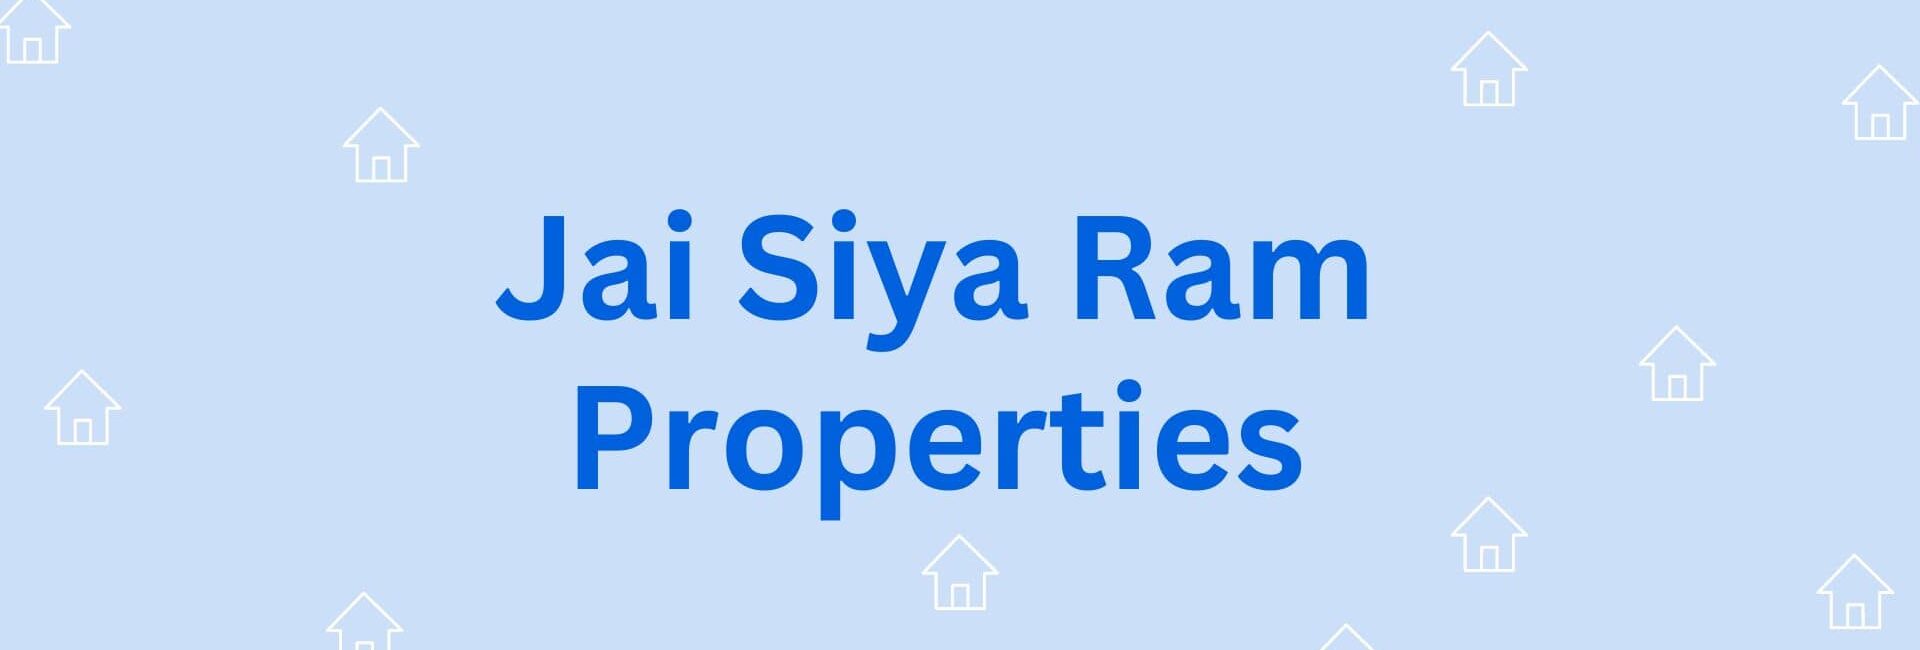 Jai Siya Ram Properties - Property Dealer in Hisar